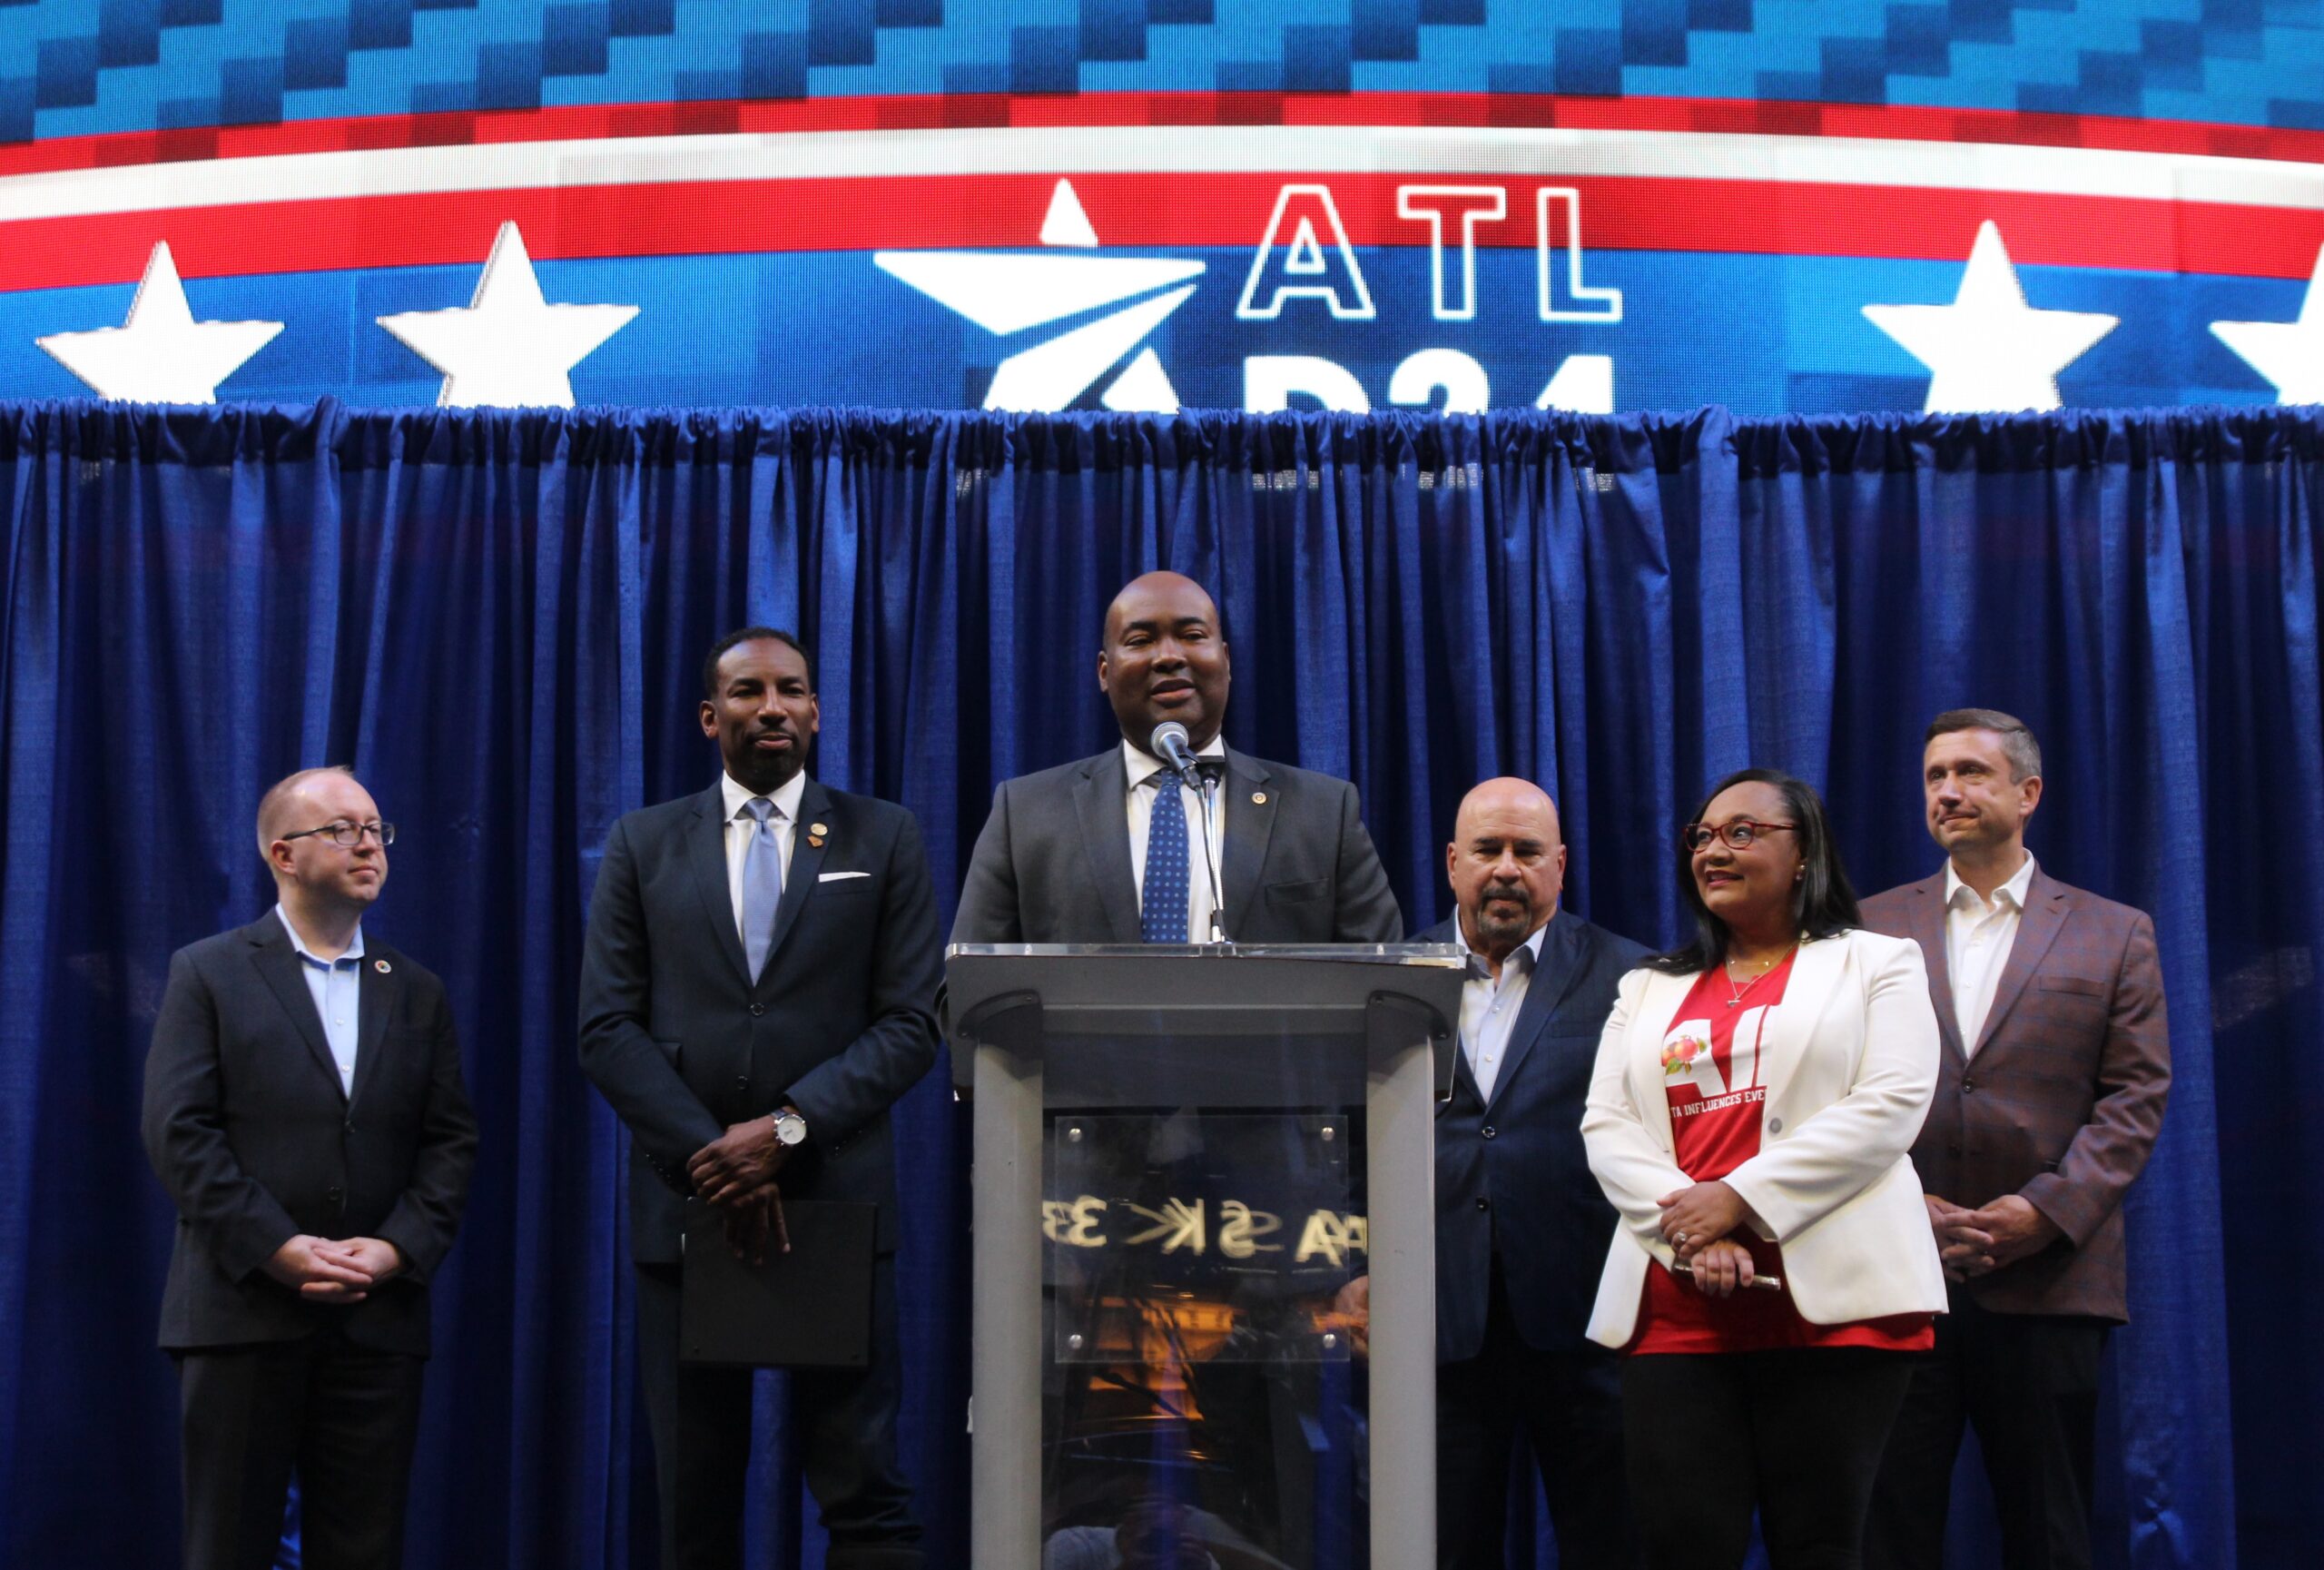 After landmark wins in 2020, Atlanta leaders make bid for next